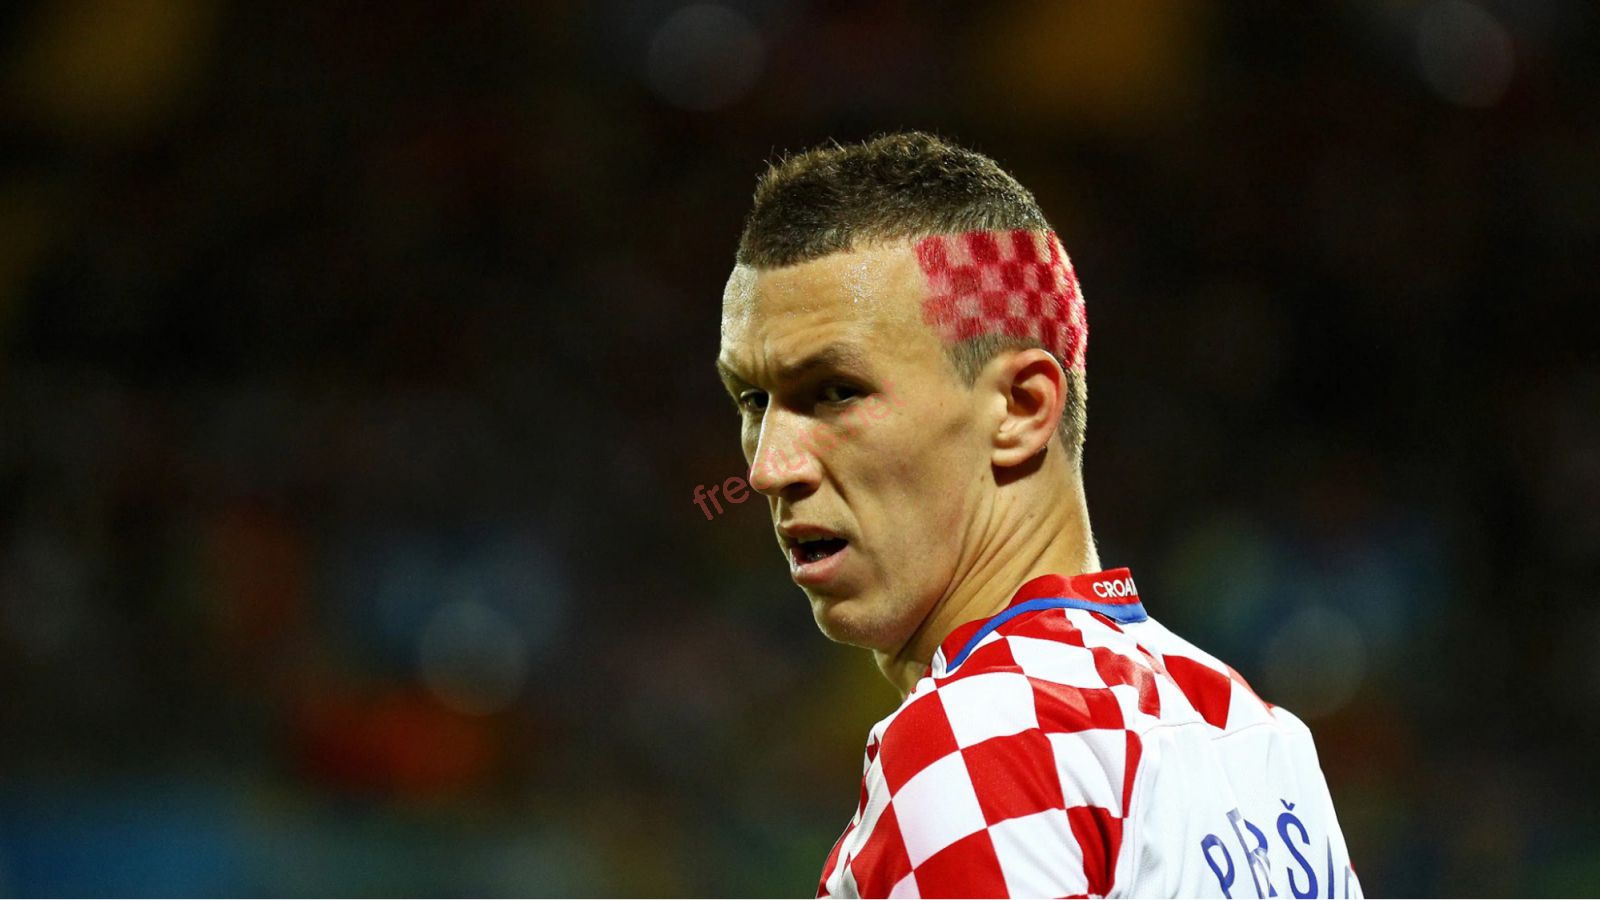 doi hinh Croatia tham du euro 04 jpg